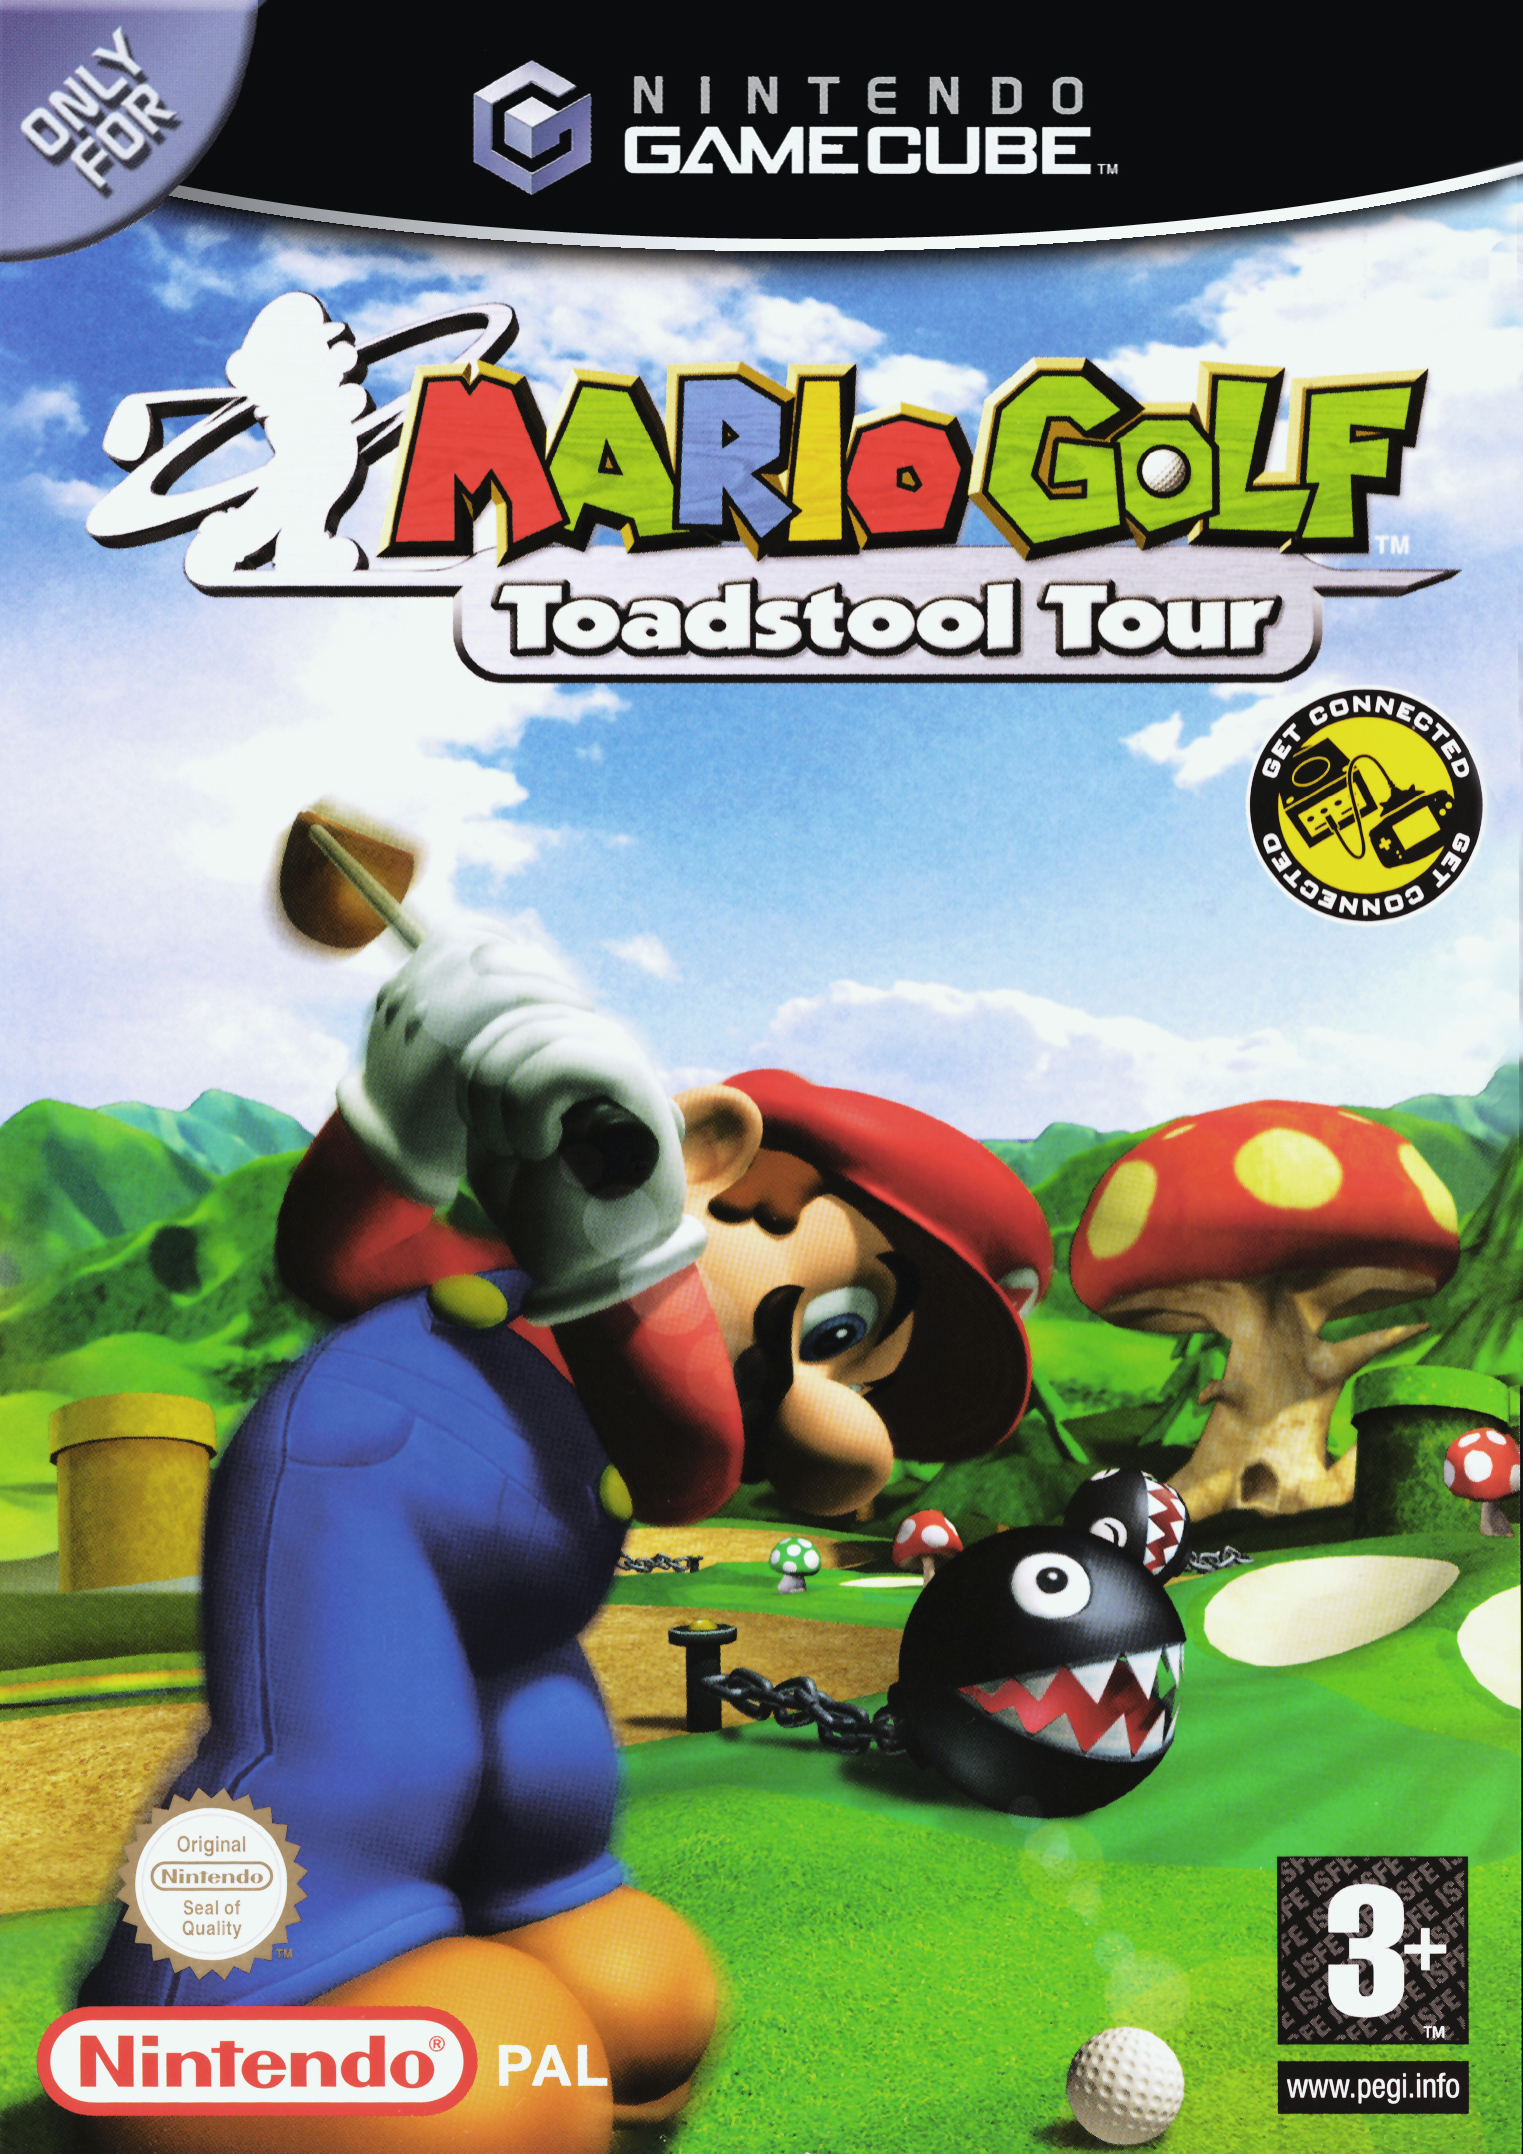 mario-golf-toadstool-tour-details-launchbox-games-database